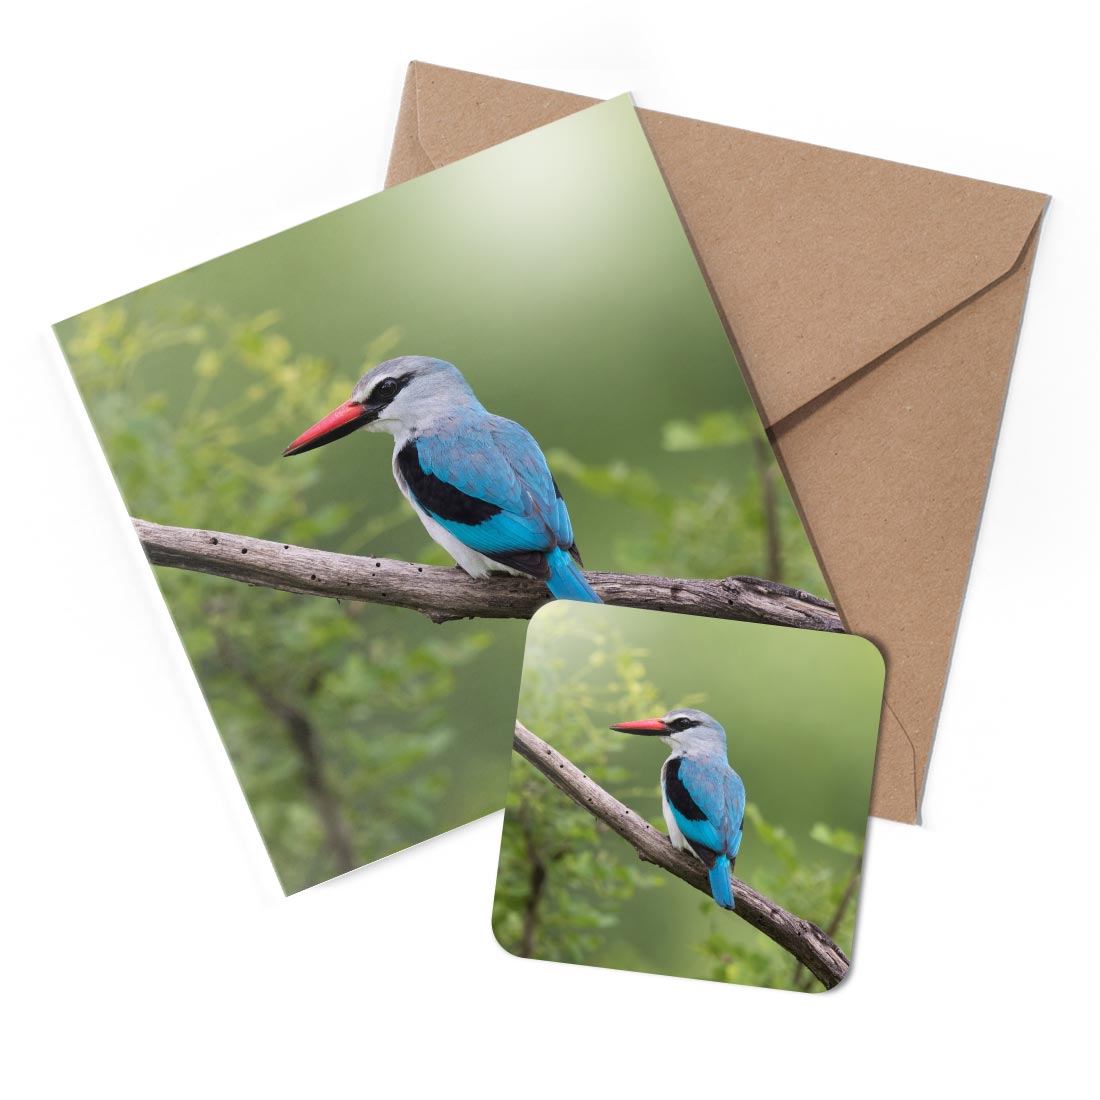 1 x Greeting Card & Coaster Set - Blue Kingfisher Bird Wild #52662